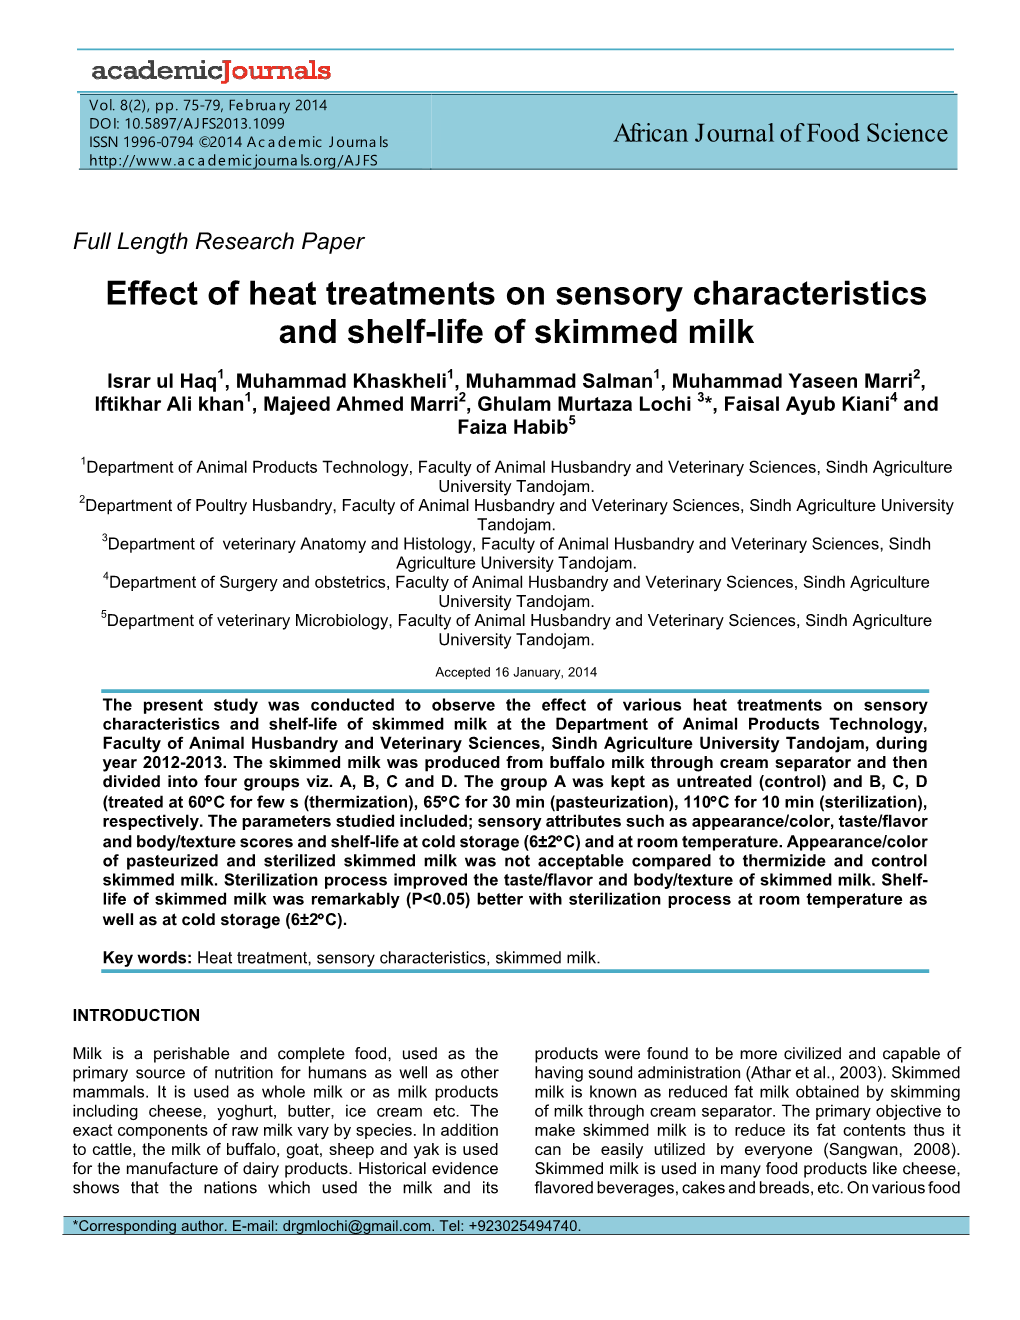 Effect of Heat Treatments on Sensory Characteristics and Shelf-Life of Skimmed Milk